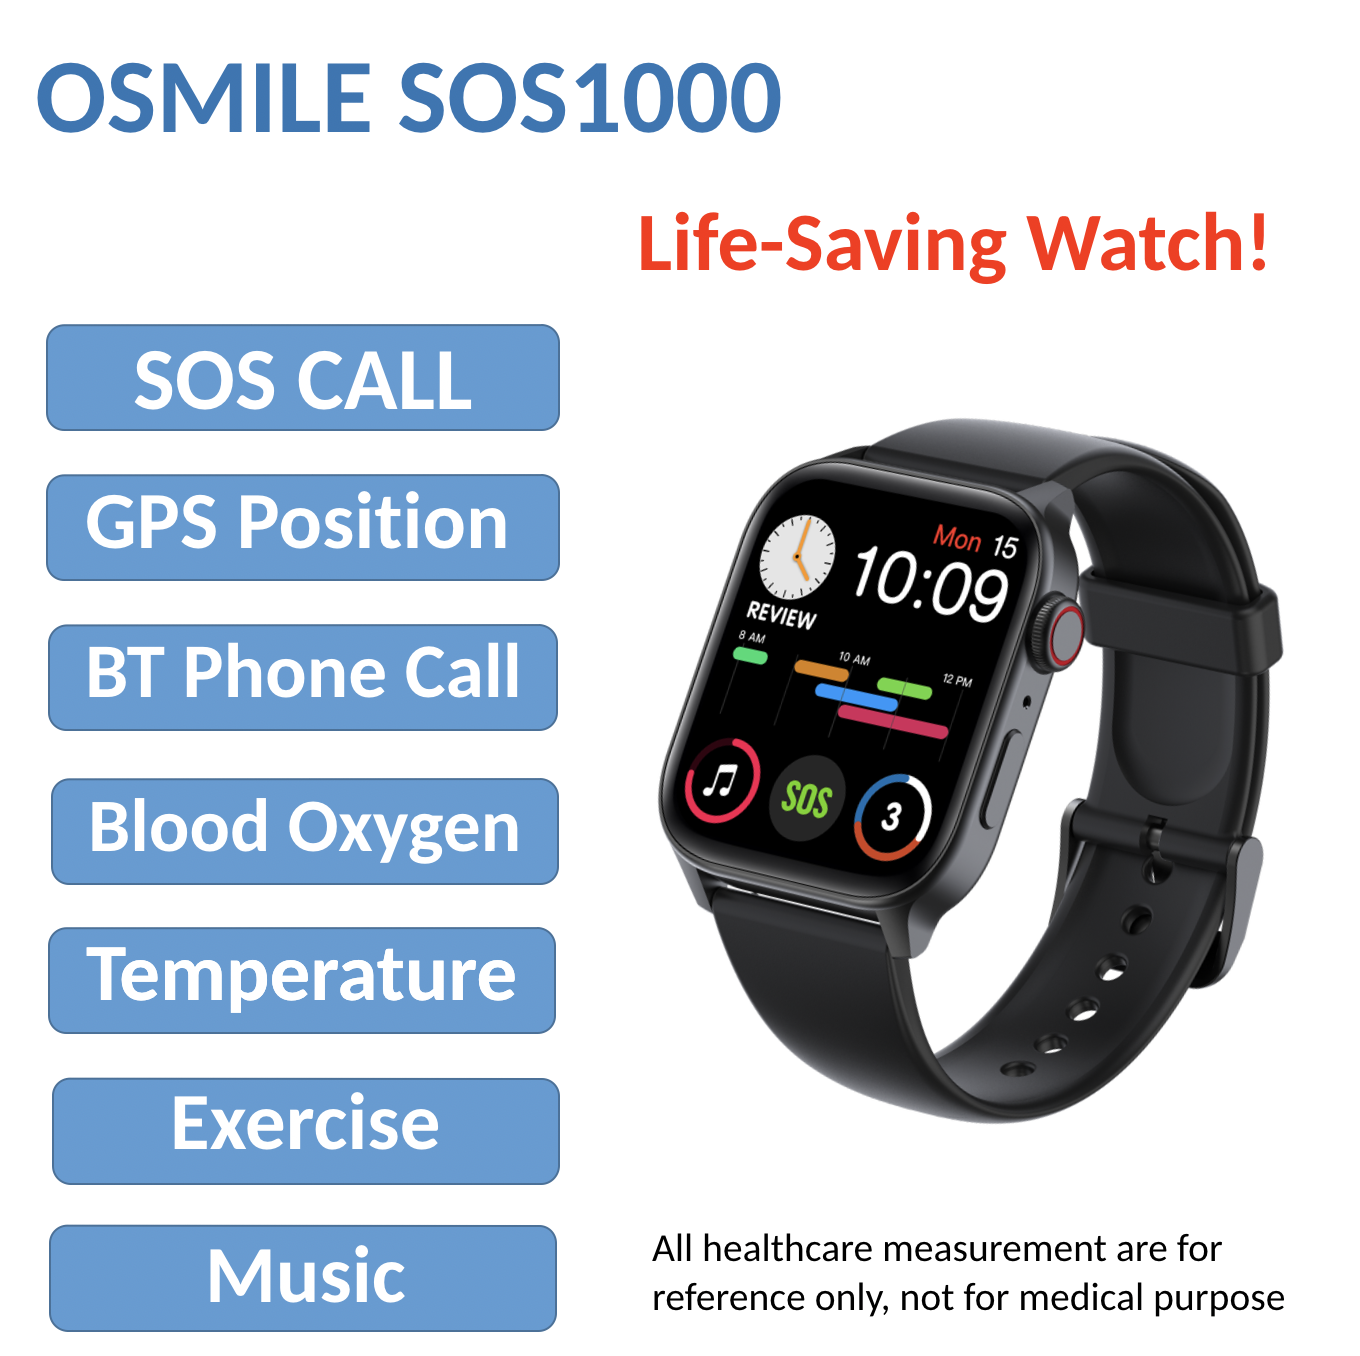 Osmile SOS1000 Life-Savin GPS SOS Watch